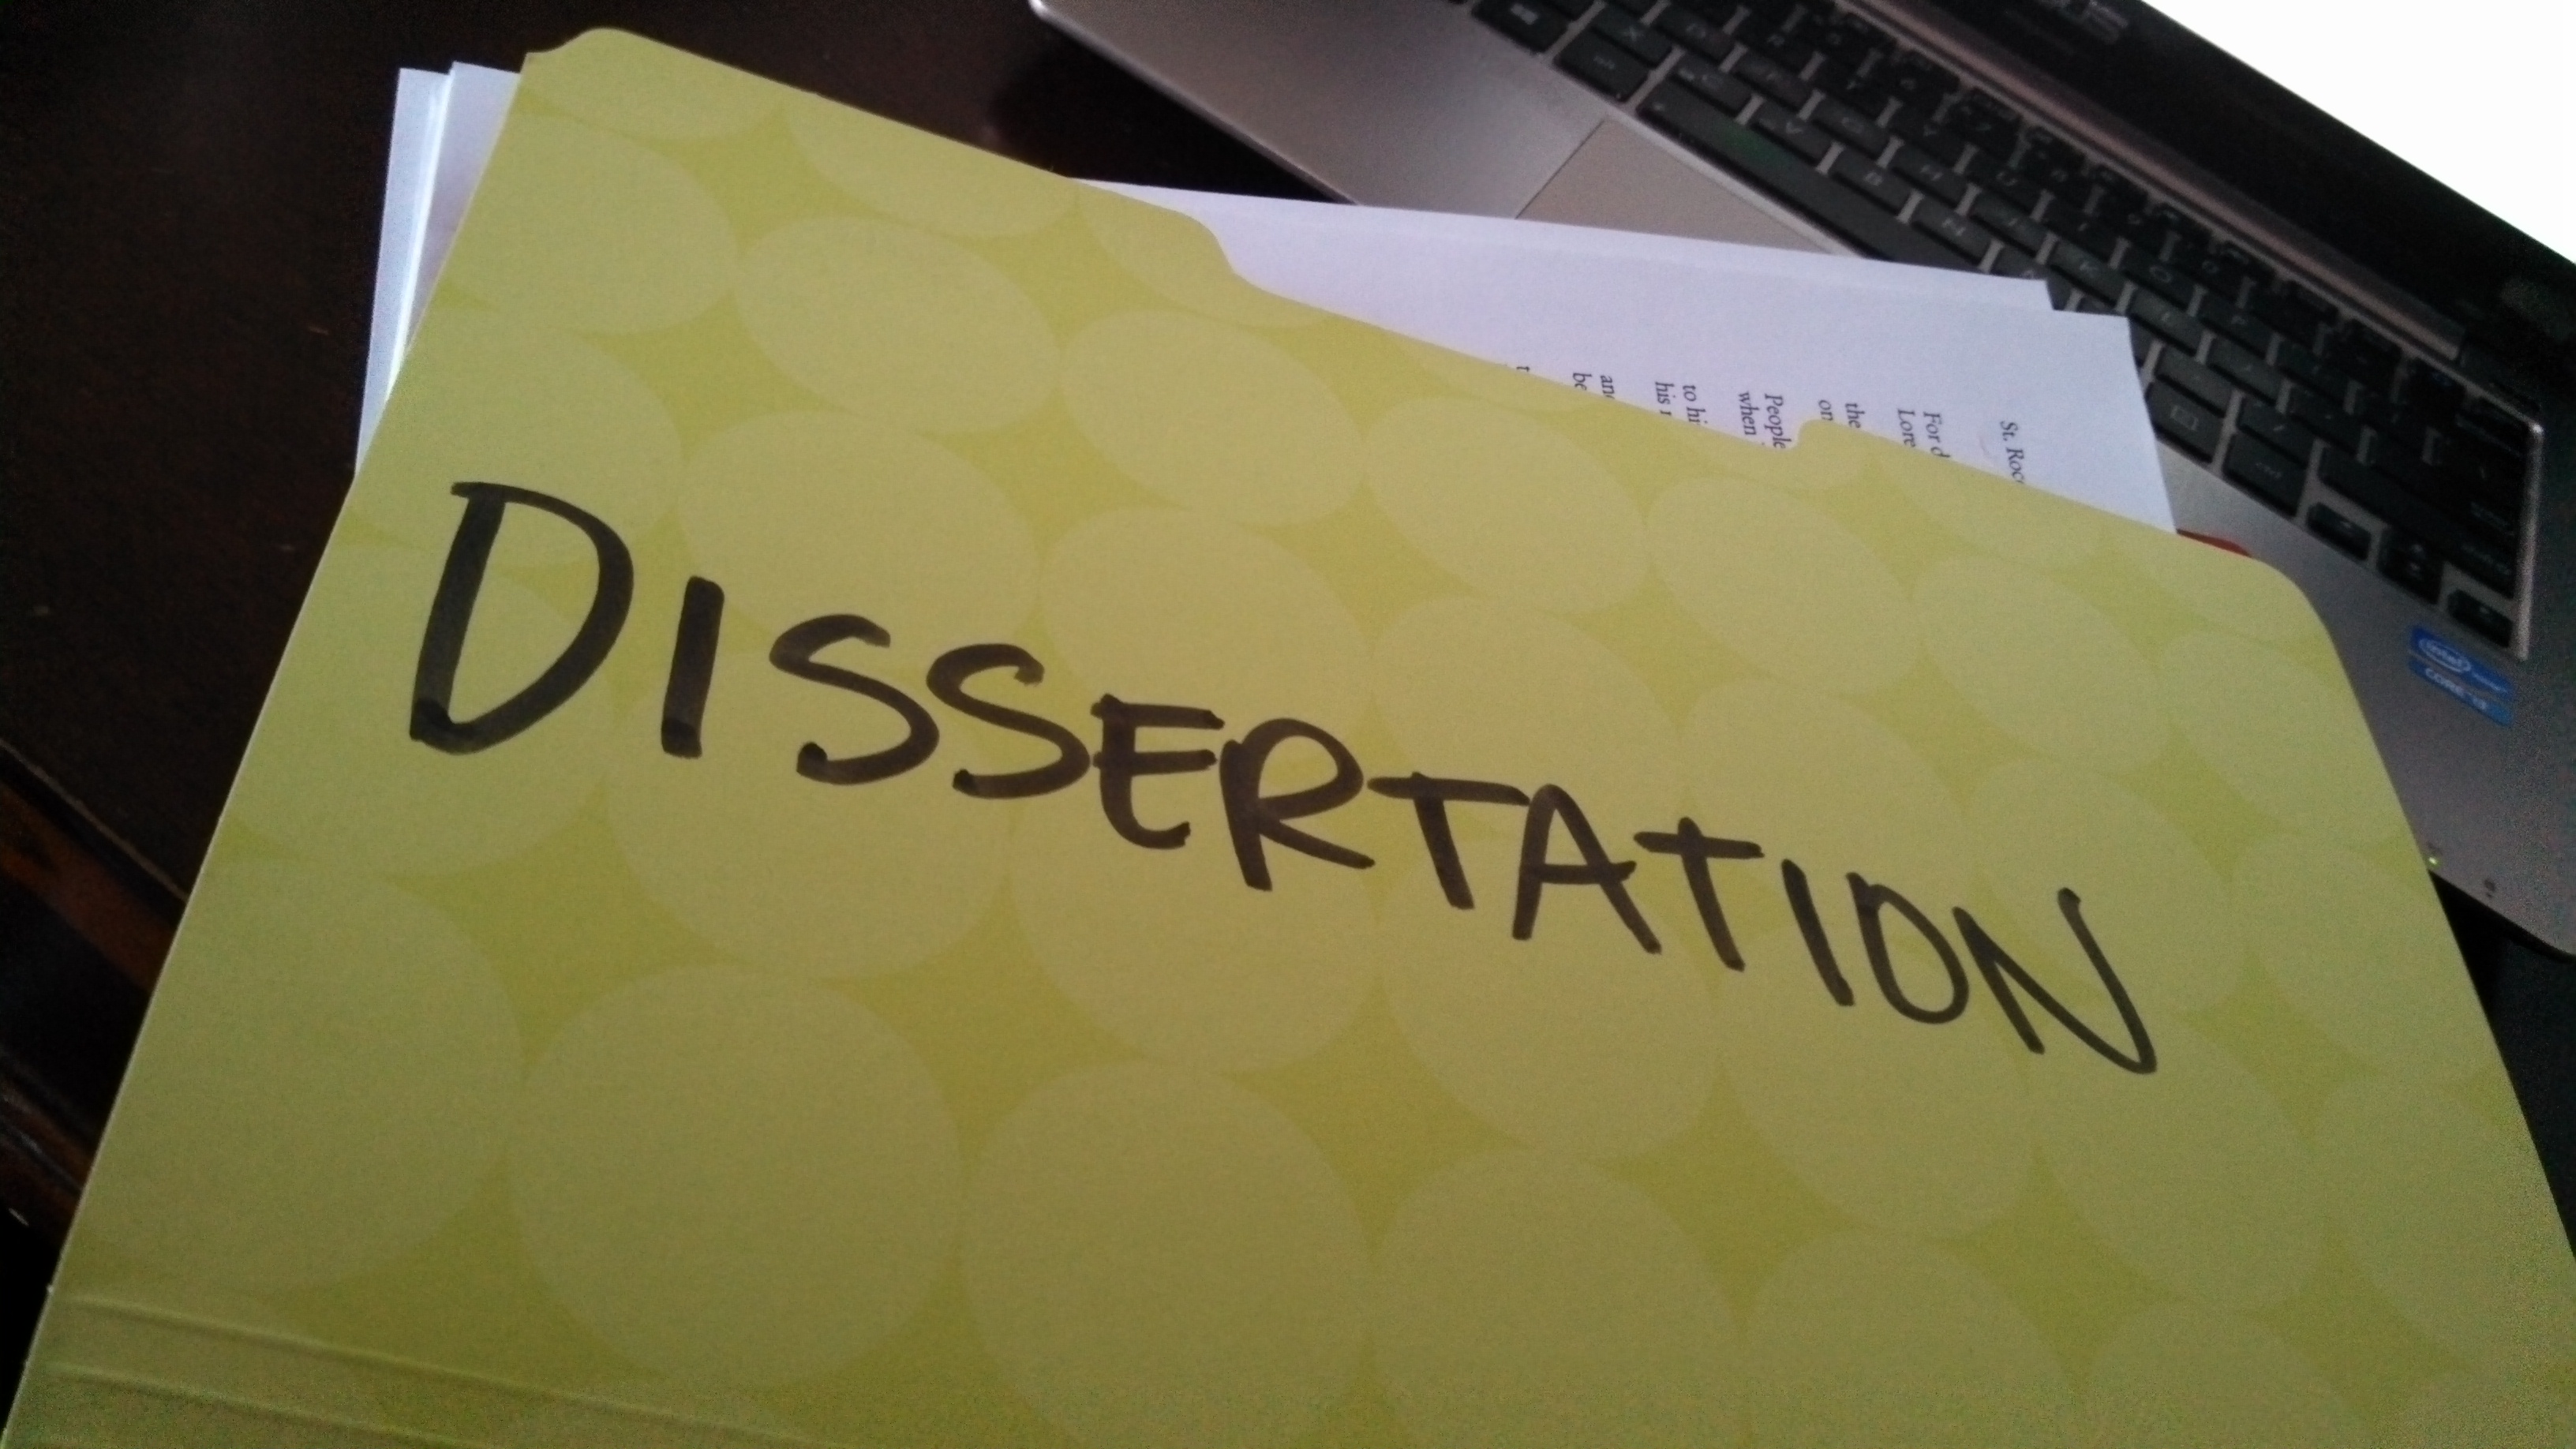 Phd dissertation help vs dissertation